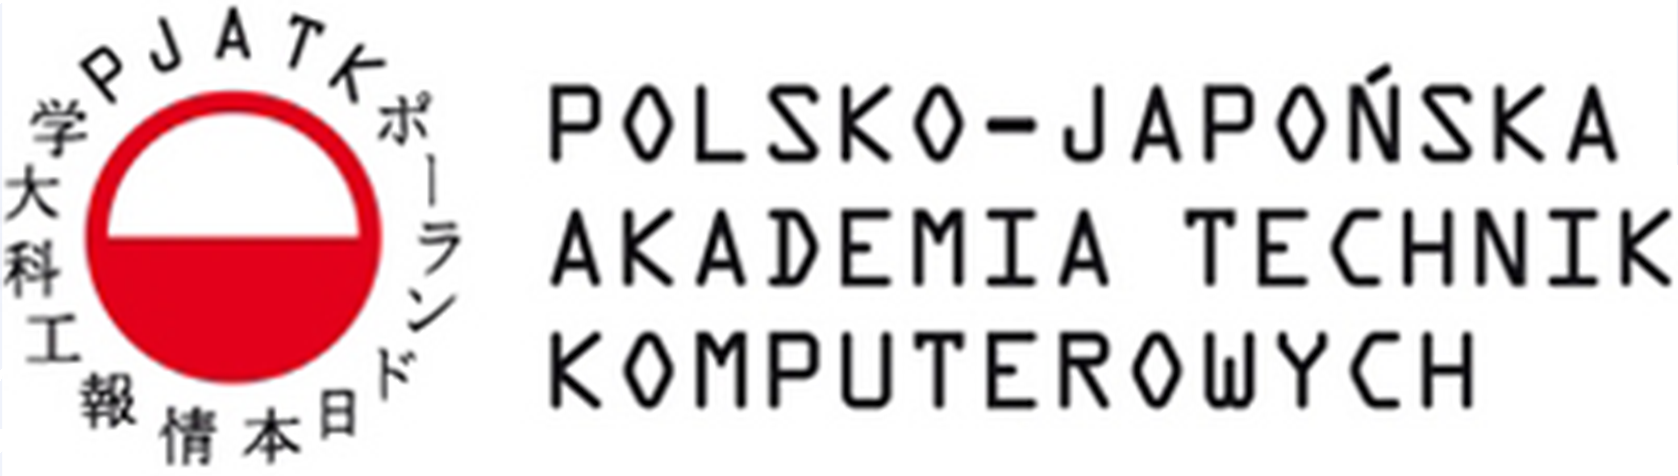 pjatk_logo